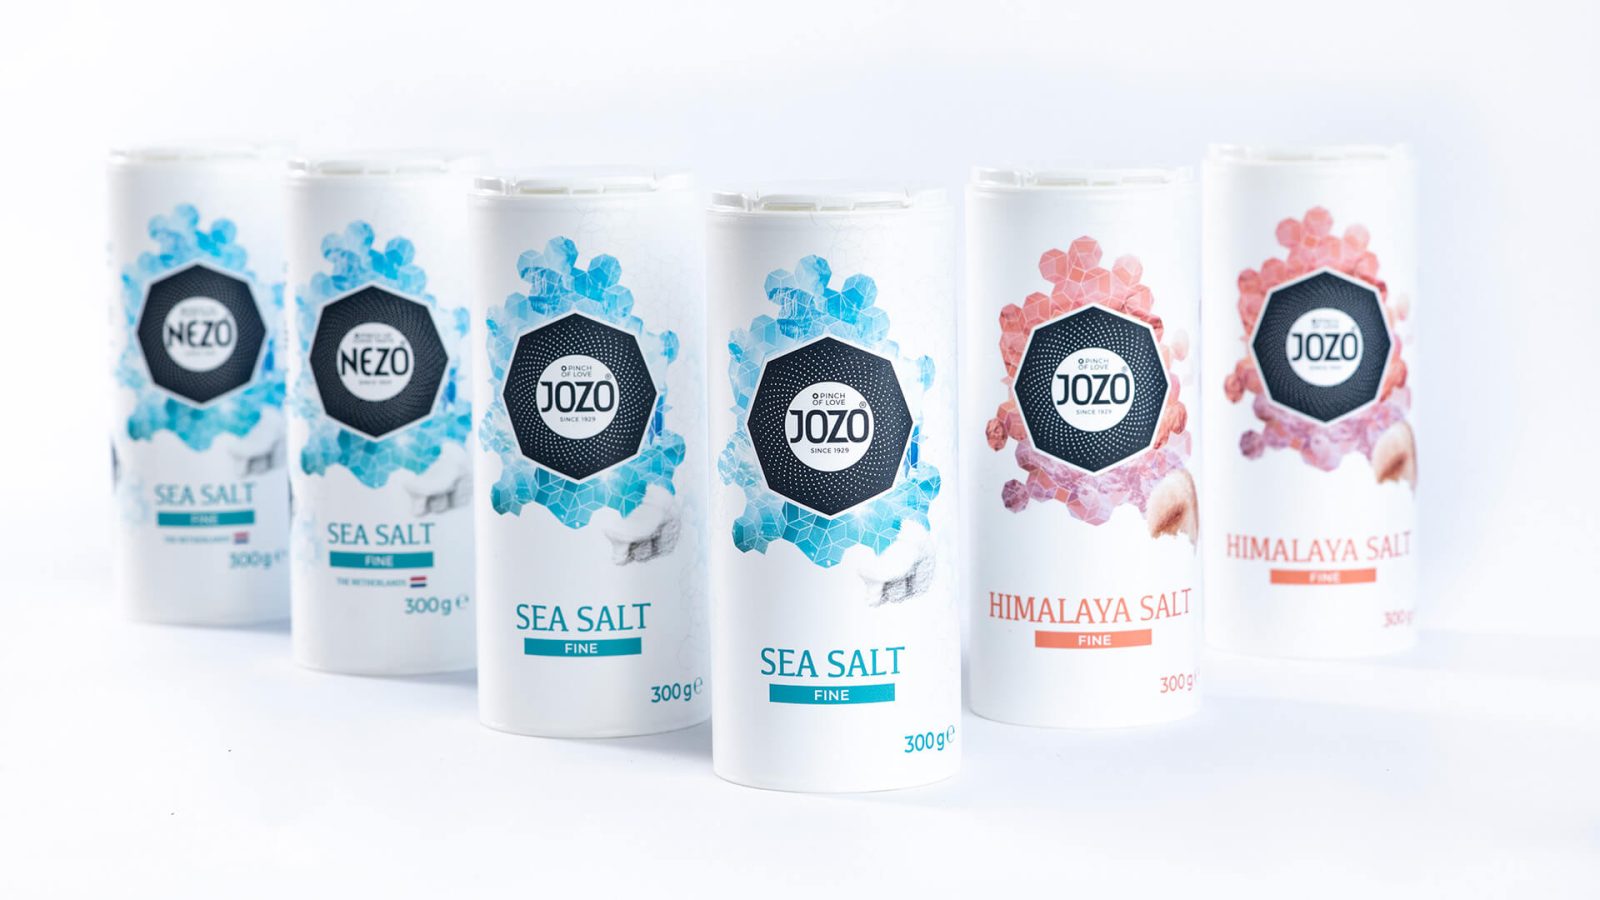 JOZOs salt shaker range